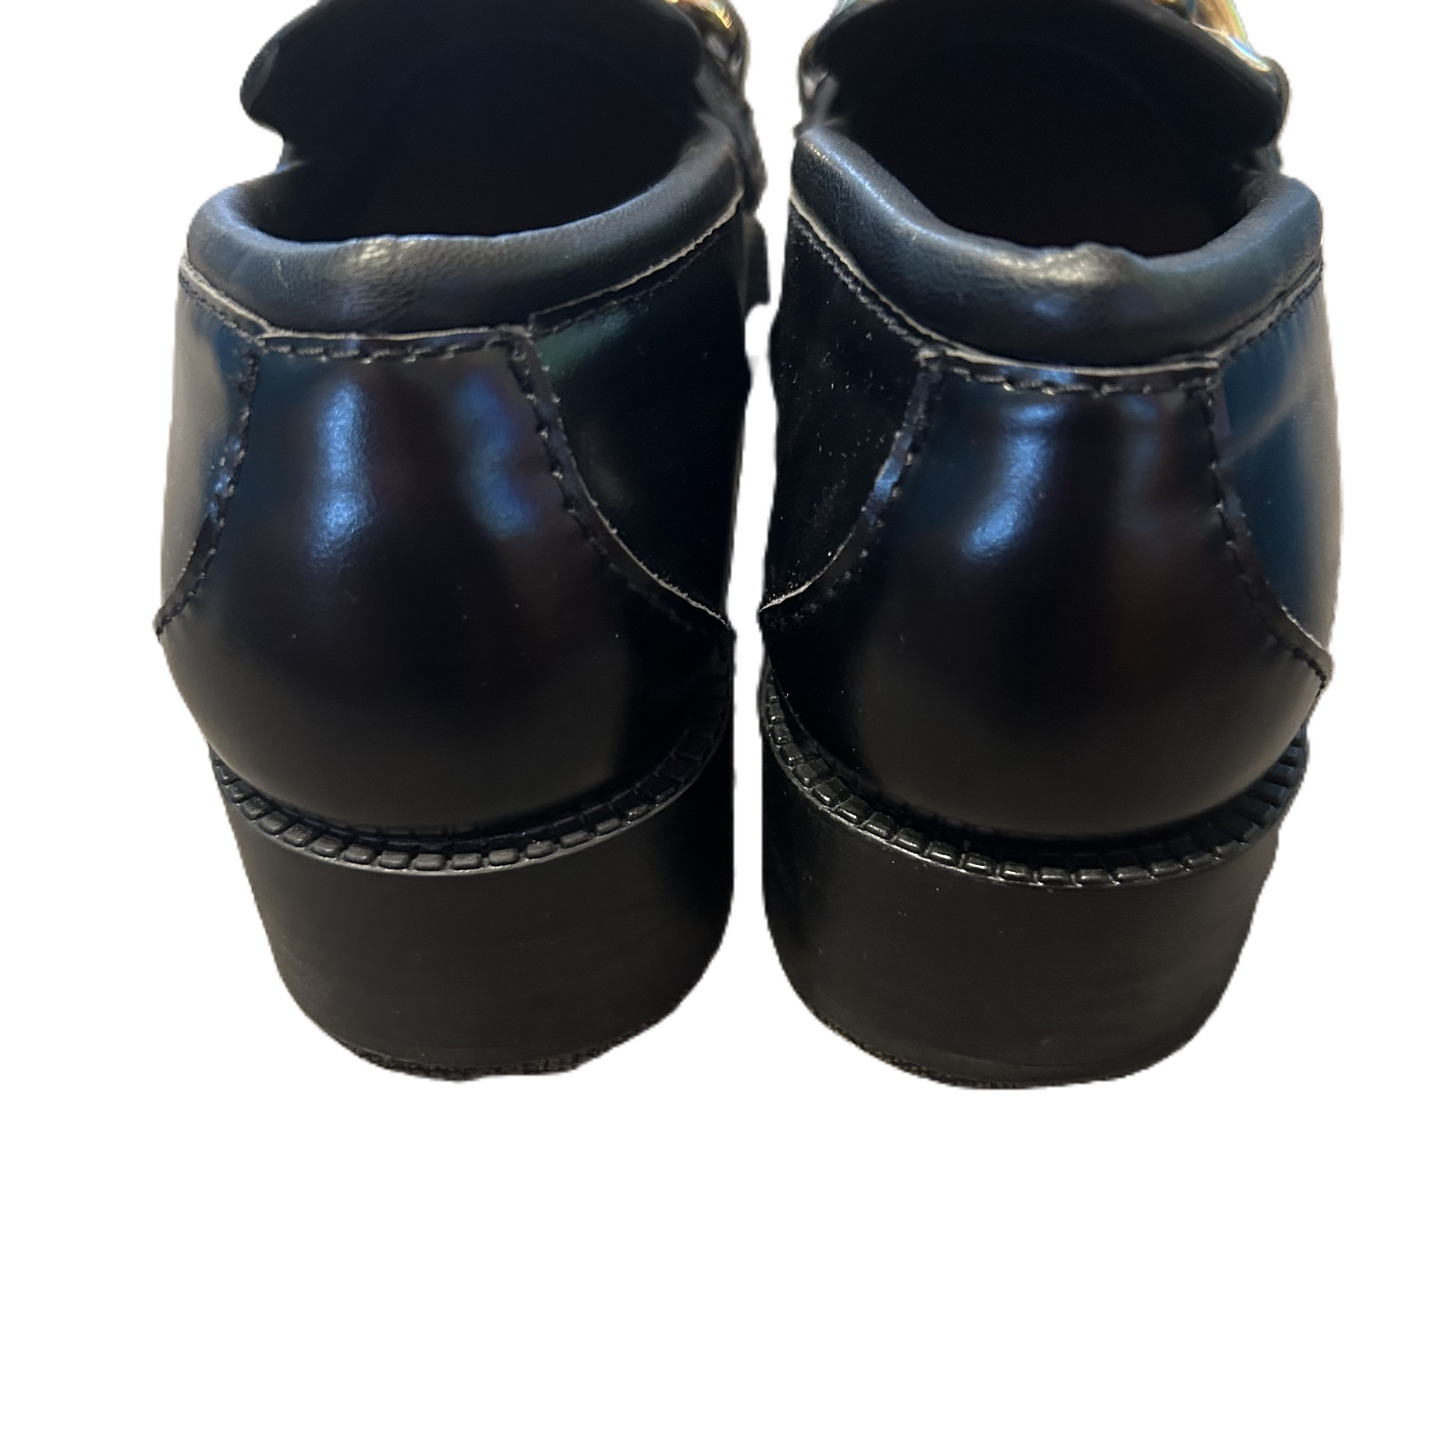 Black Shoes Flats By H&m, Size: 7.5